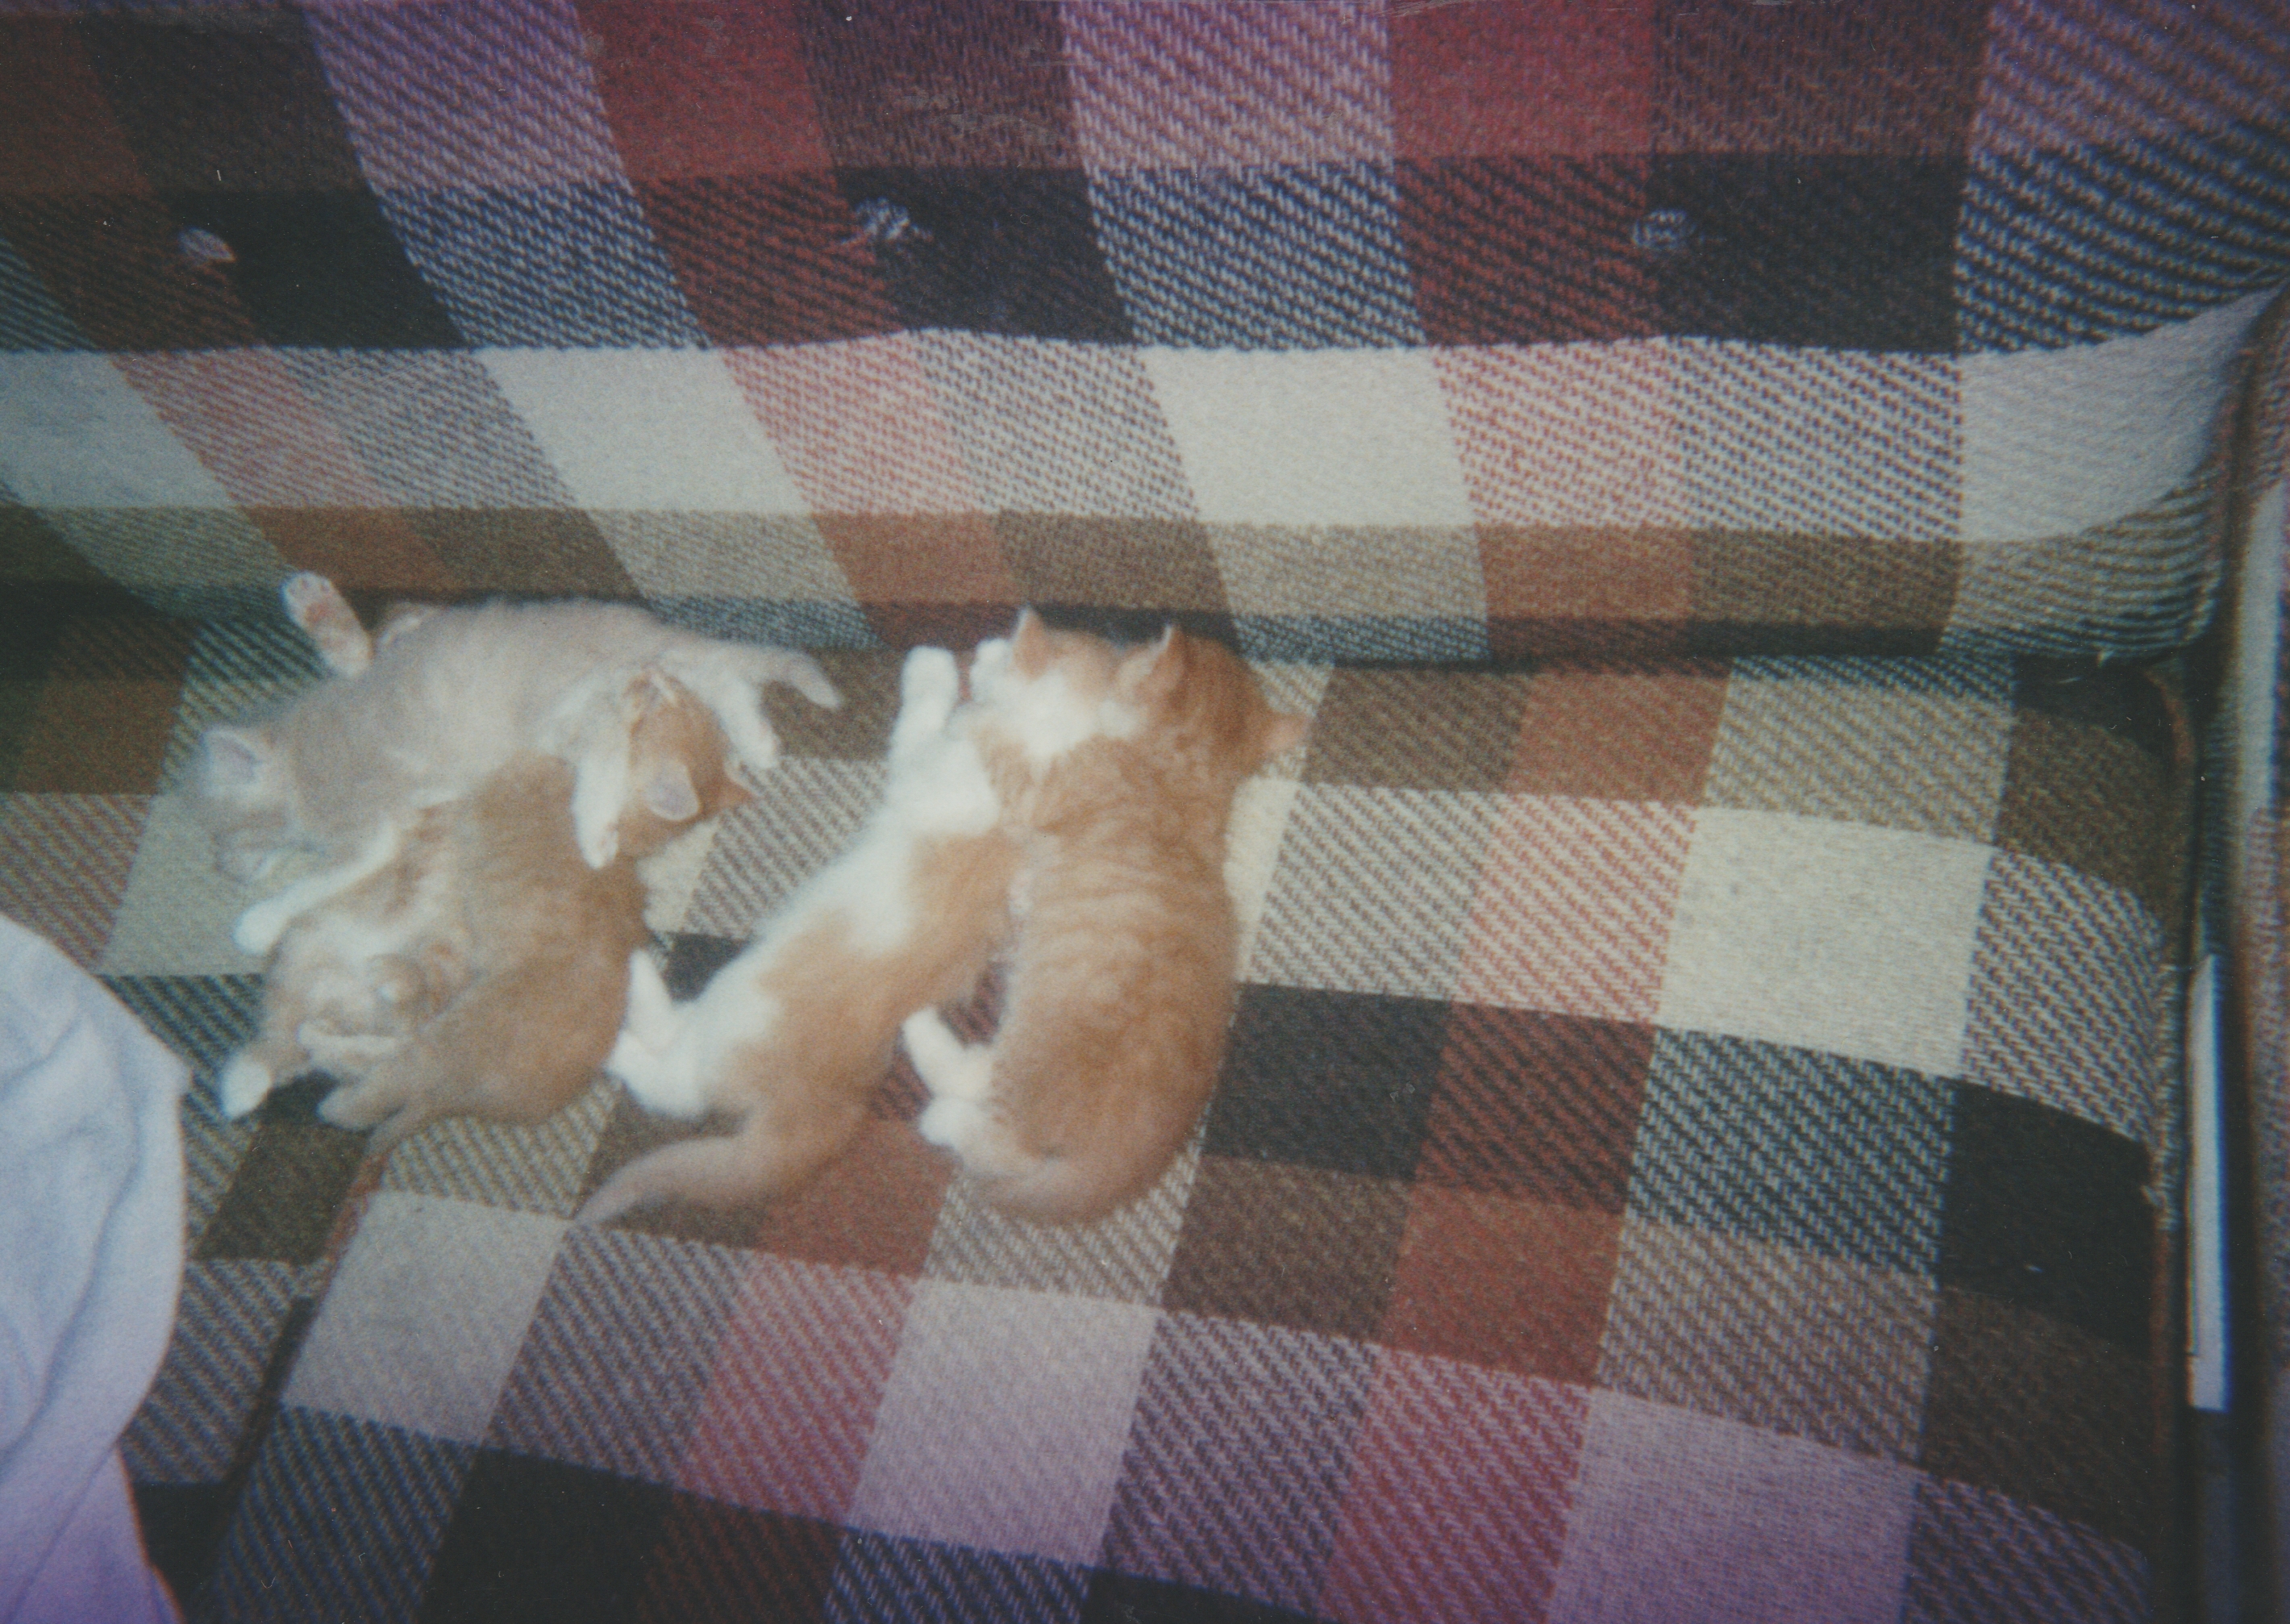 1999 maybe - Kittens, Dumb Dumb, couch.jpg